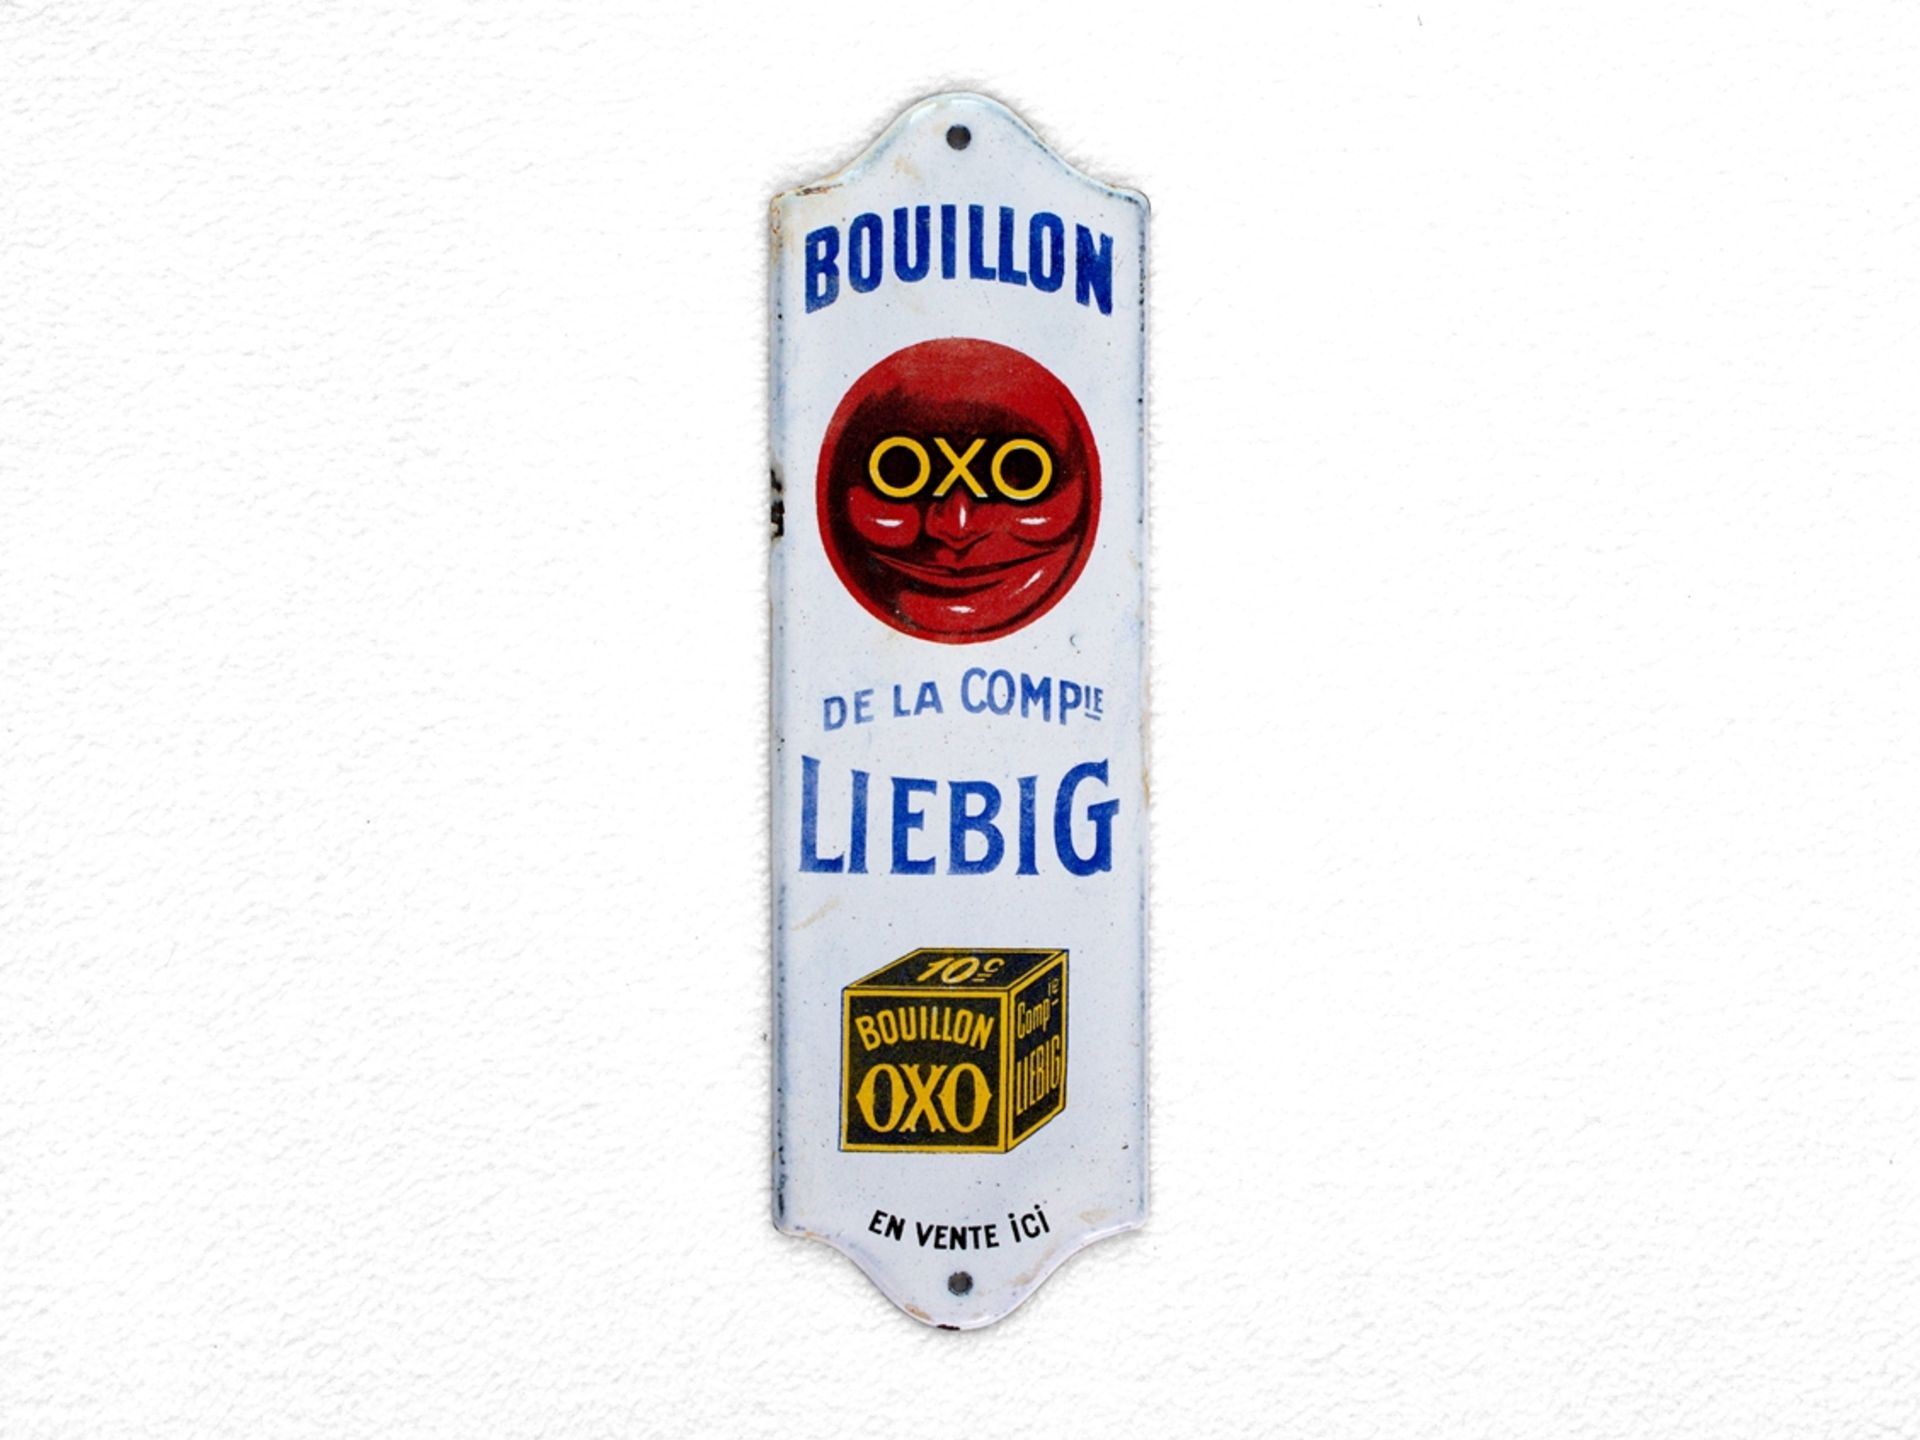 Enamel sign Bouillon Liebig OXO, France, around 1920 - Image 7 of 7